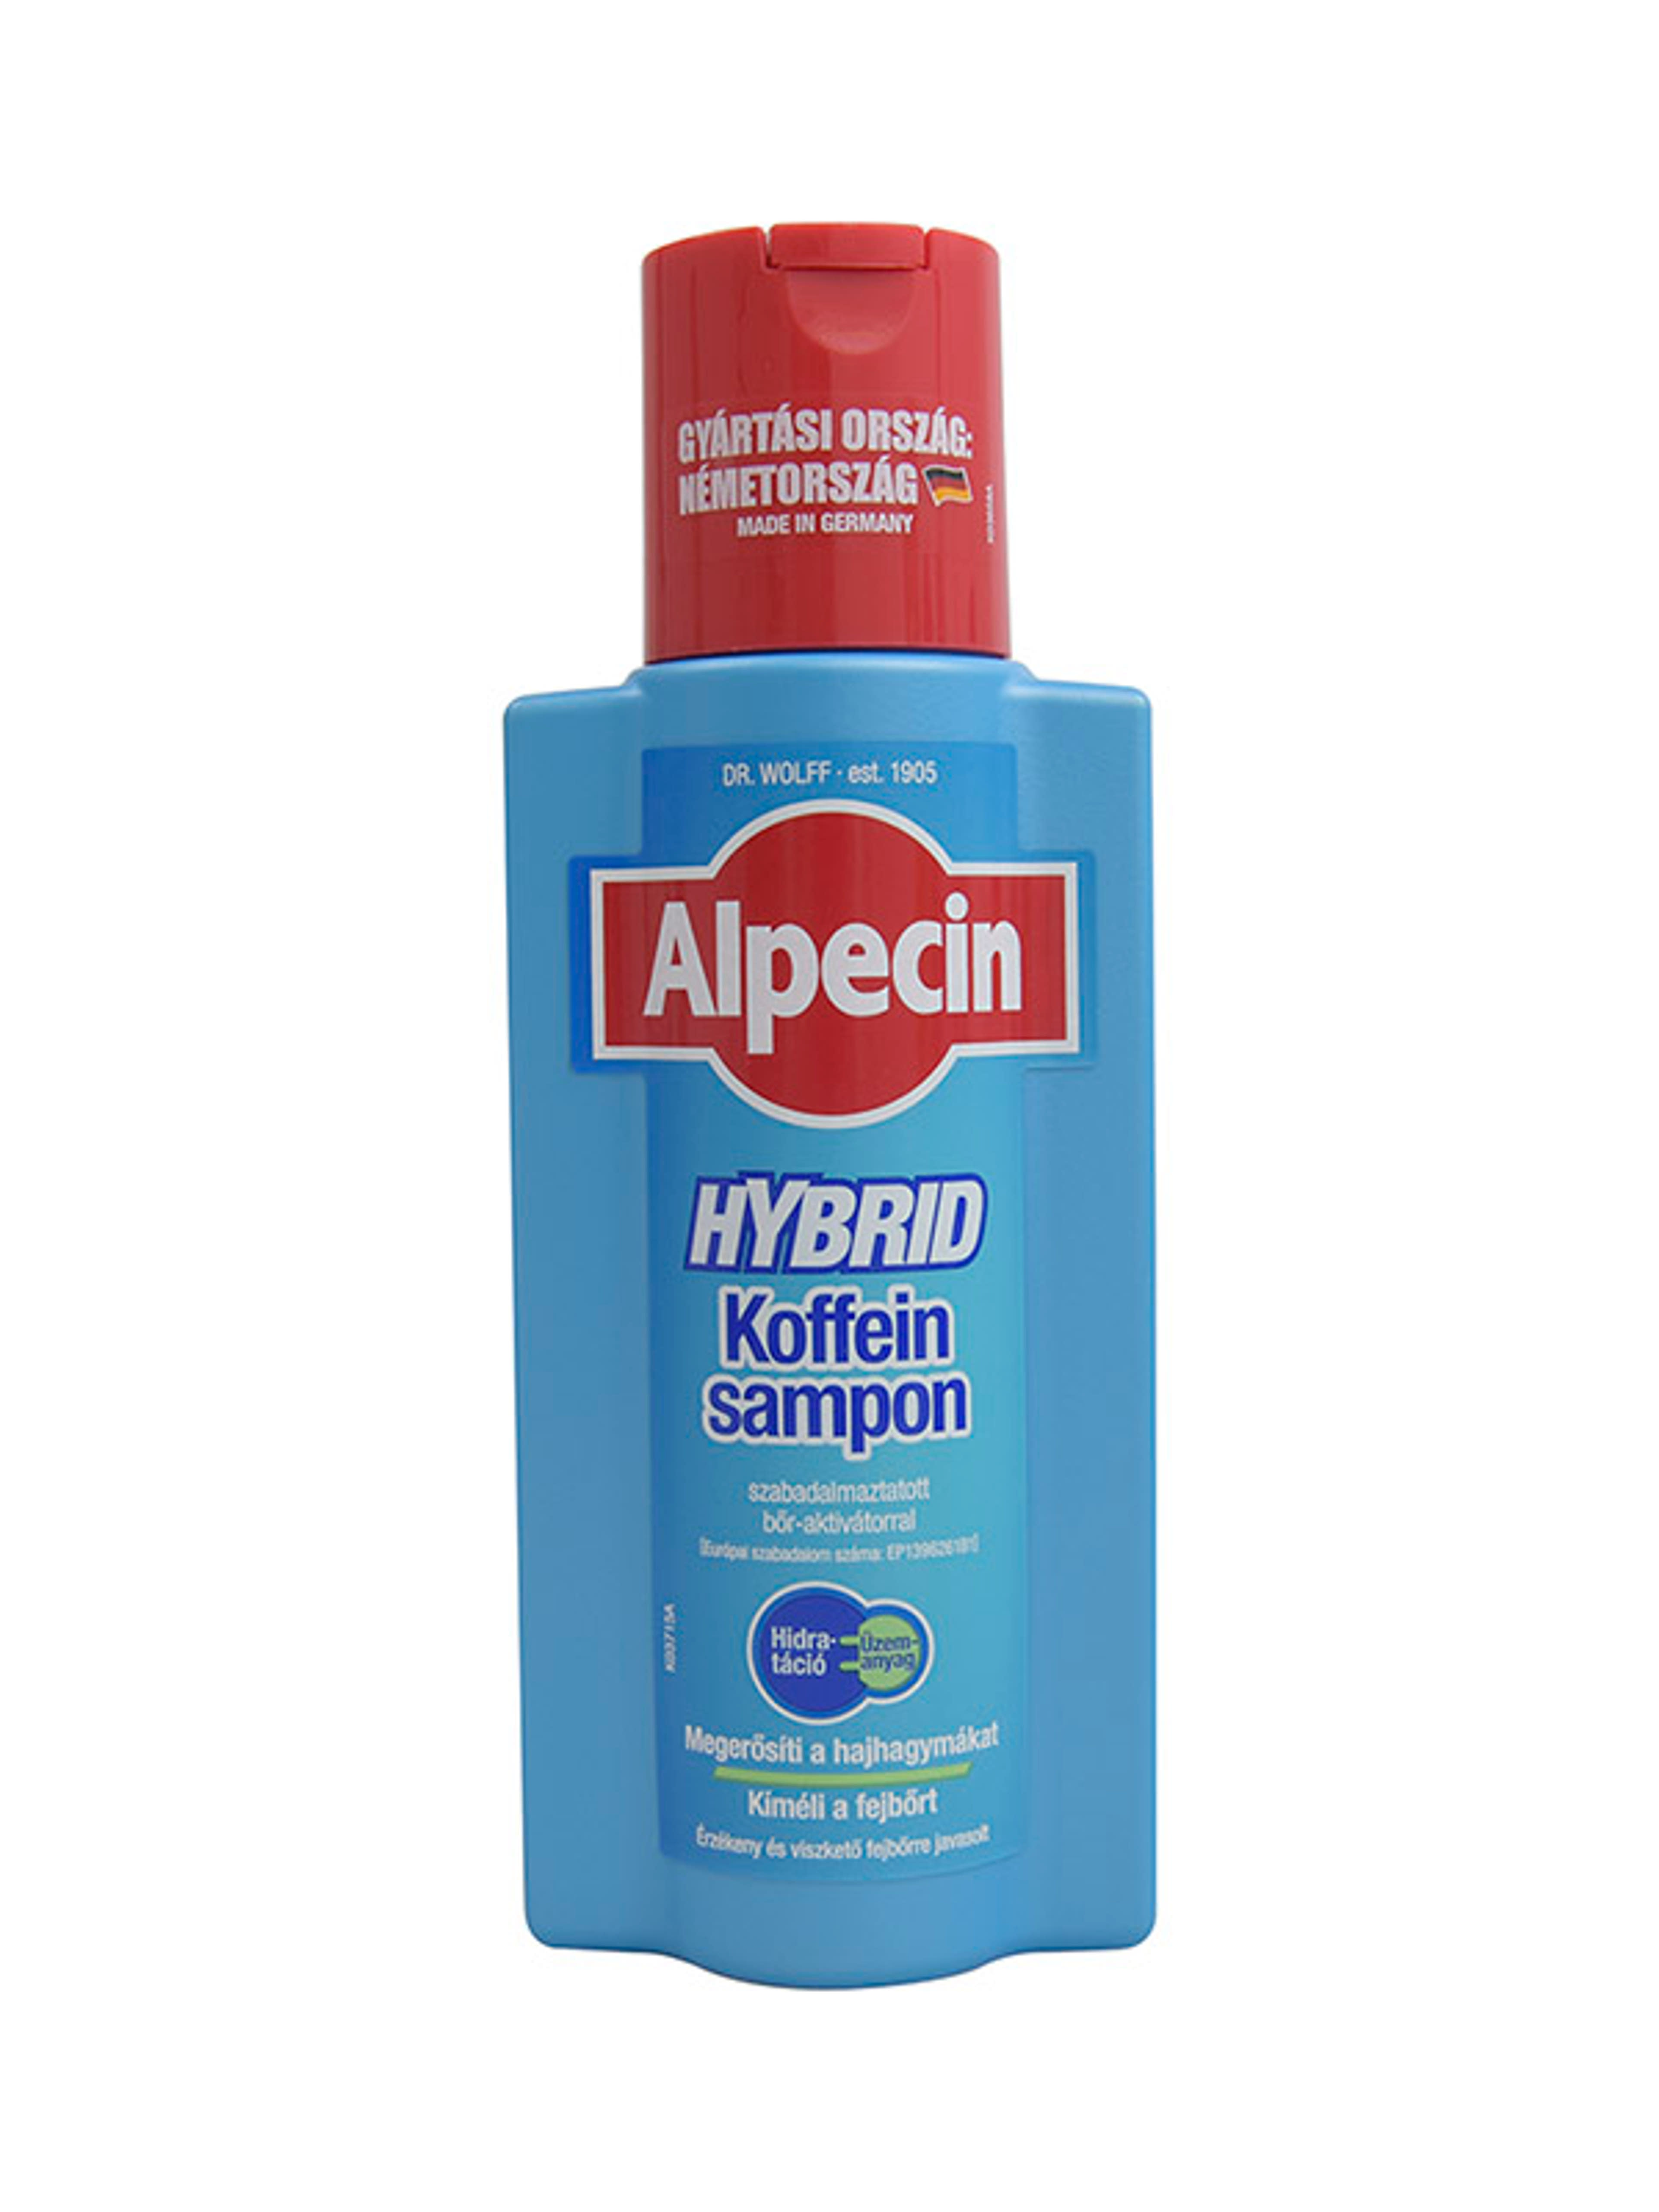 Alpecin Hybrid Koffein sampon - 250 ml-1